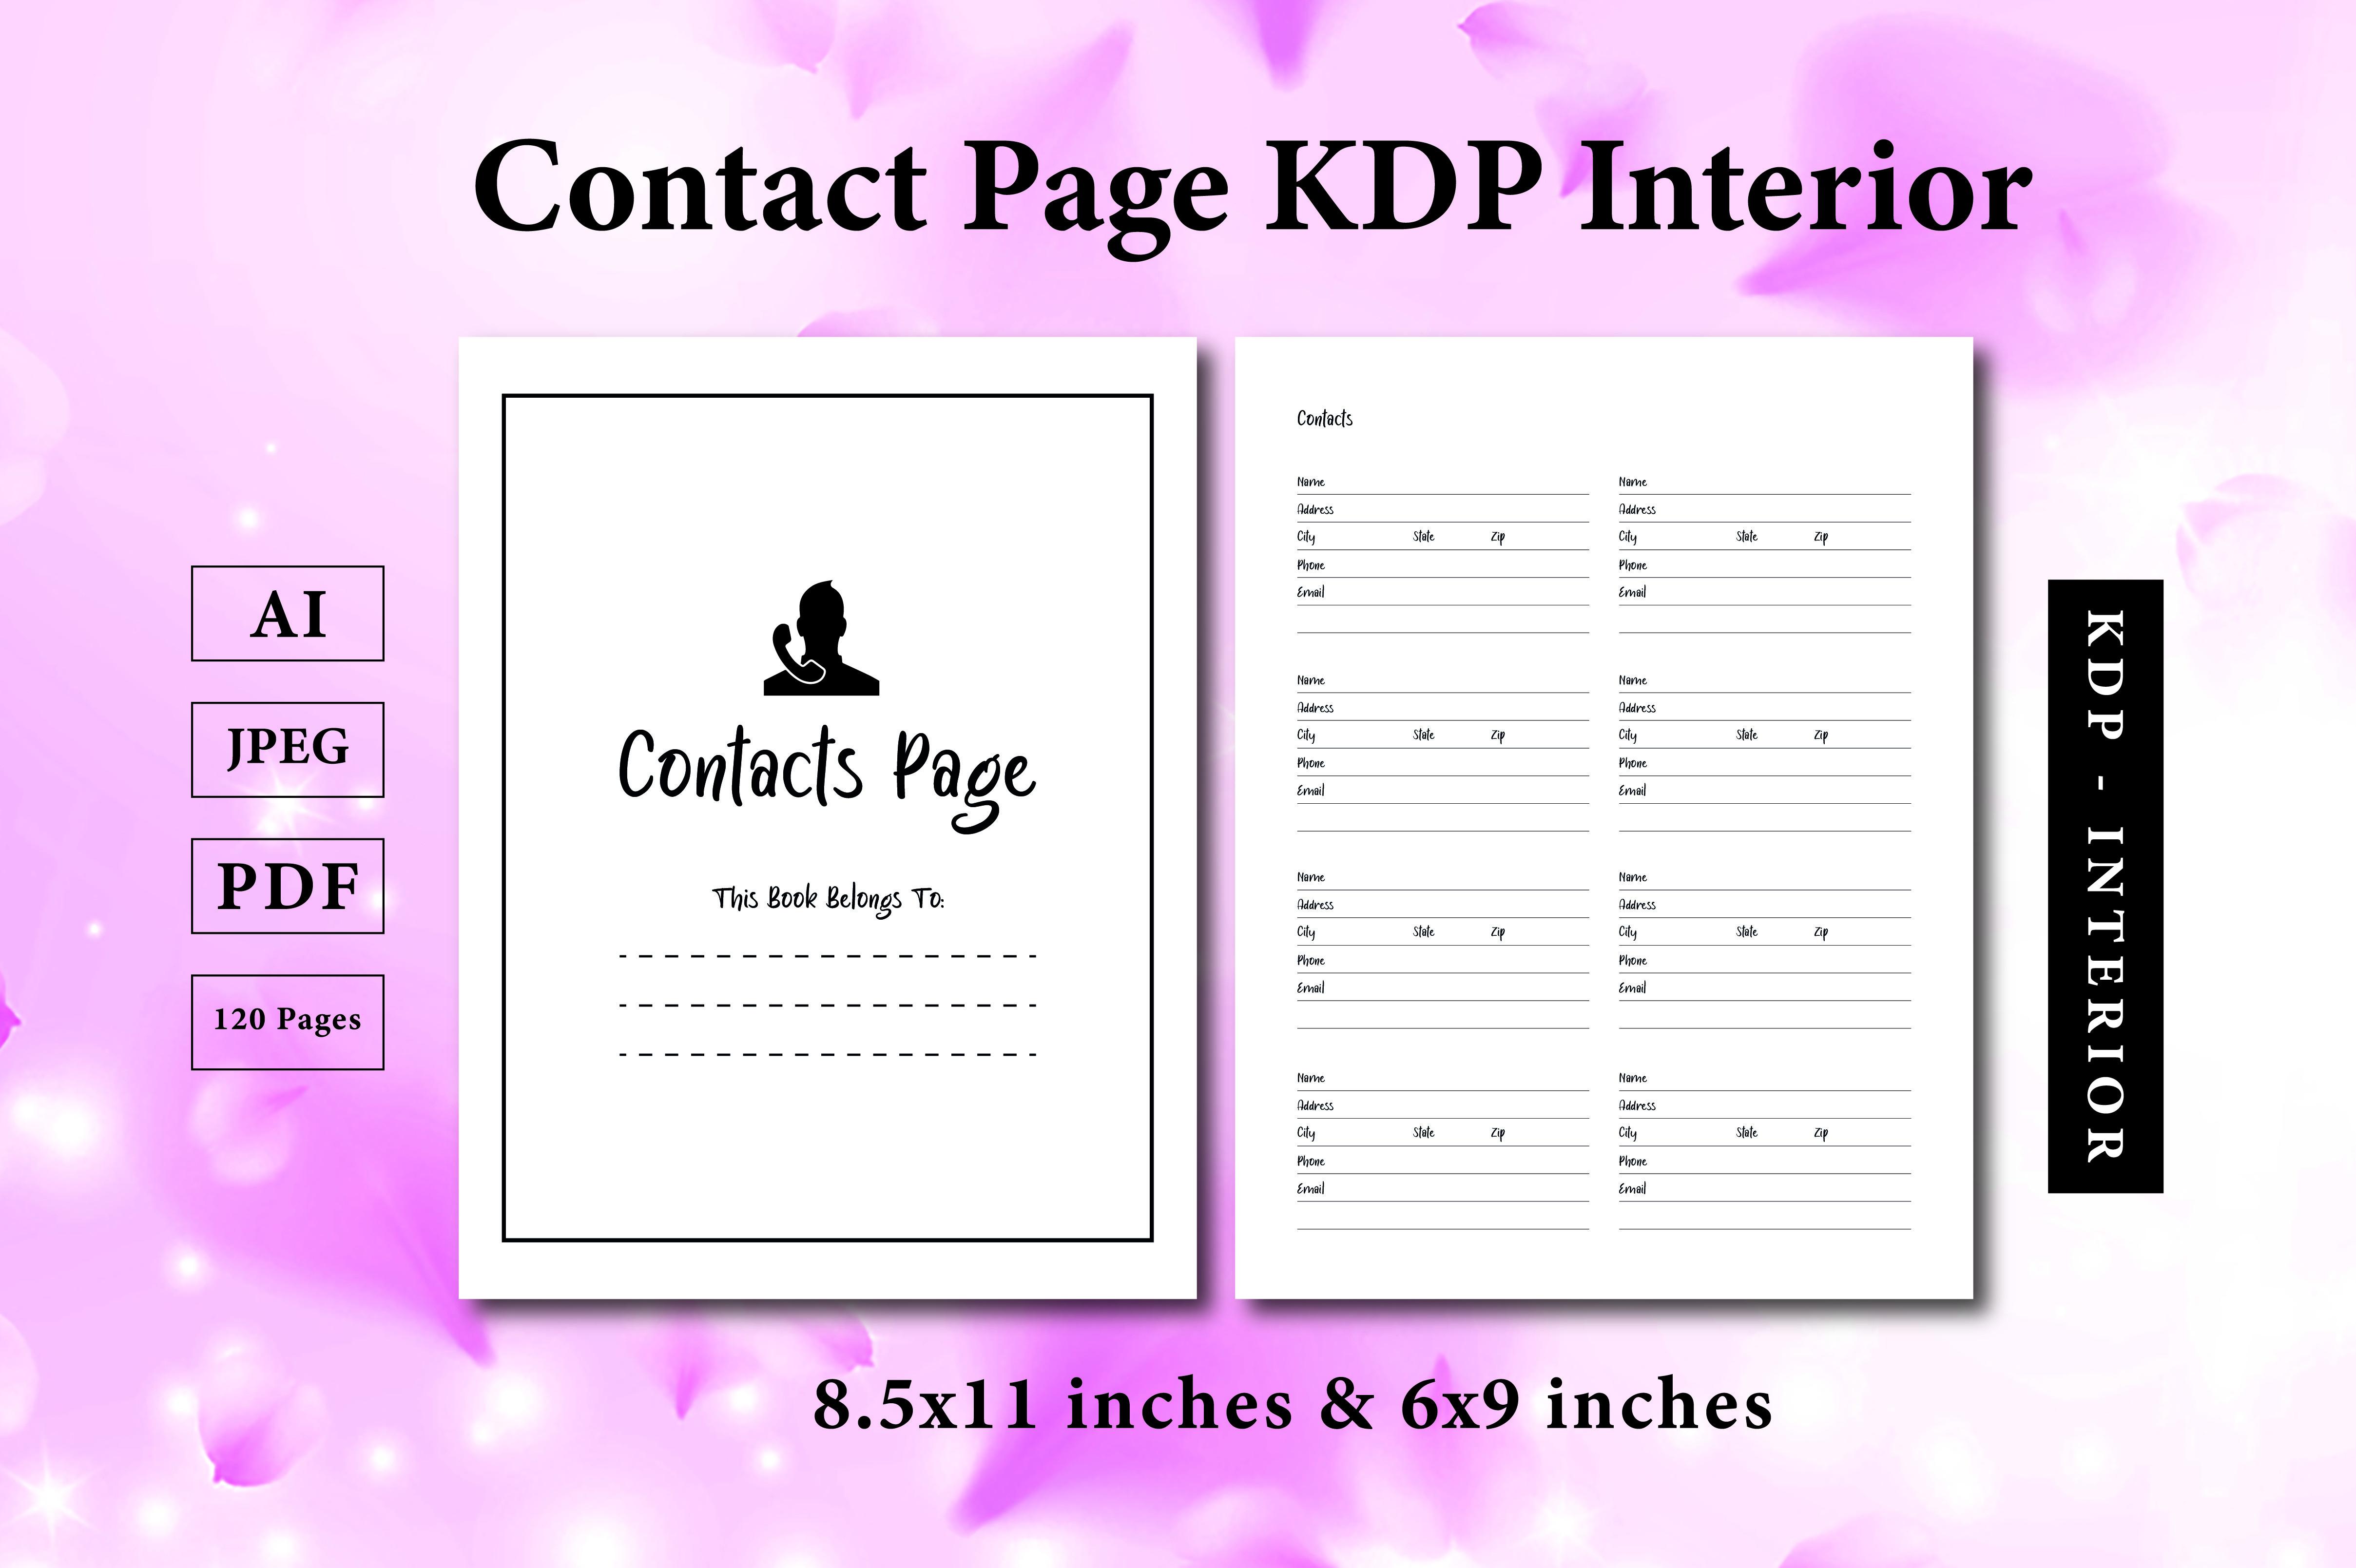 Contact Page KDP Interior